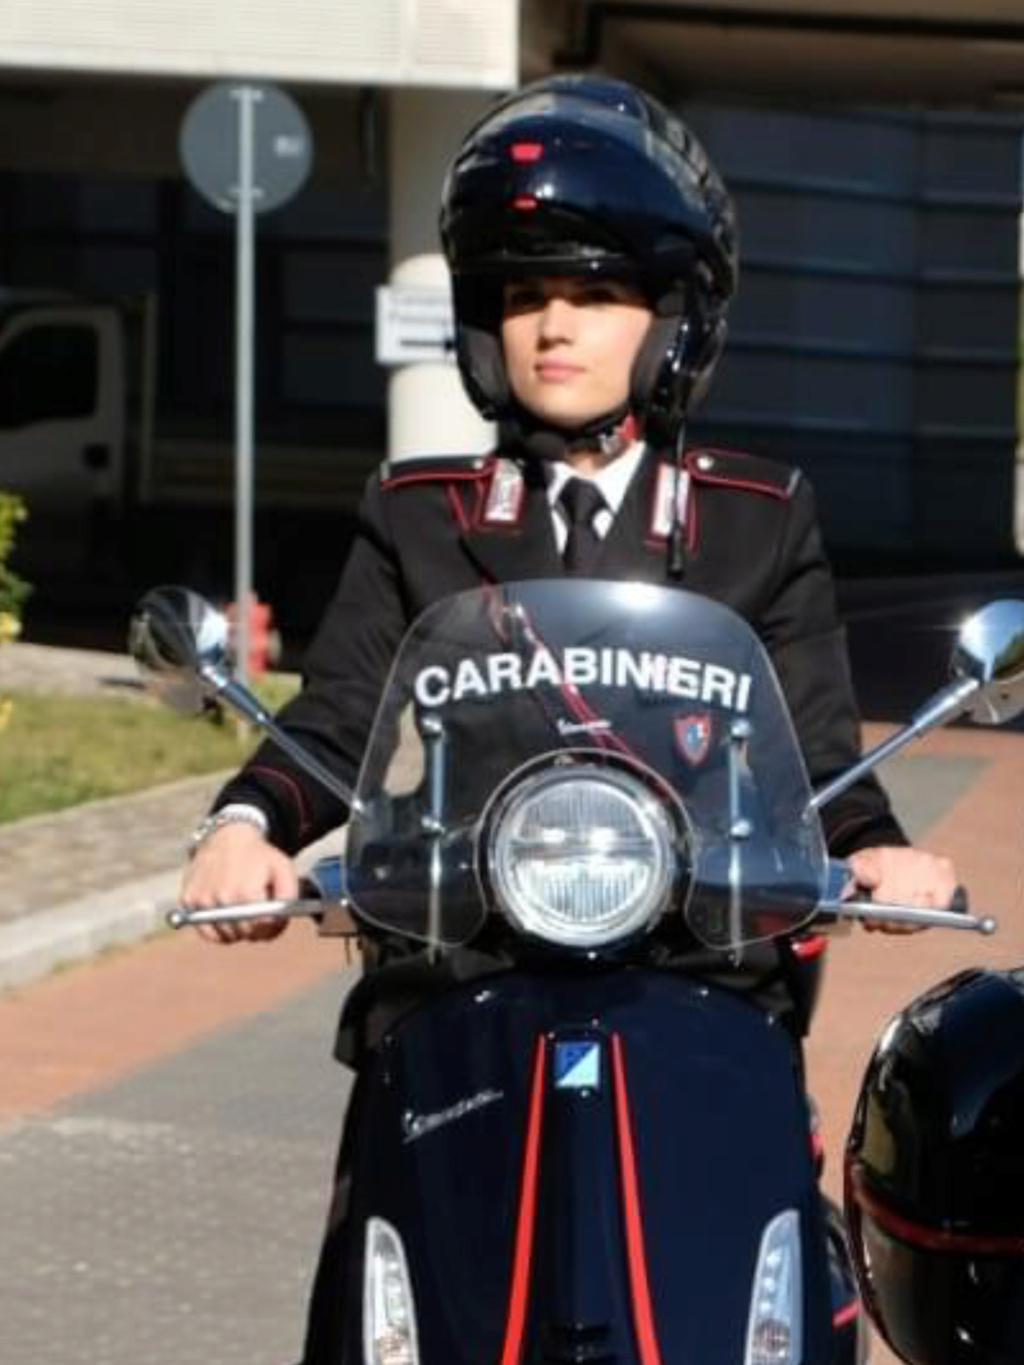 Italian Police Uniform 29210